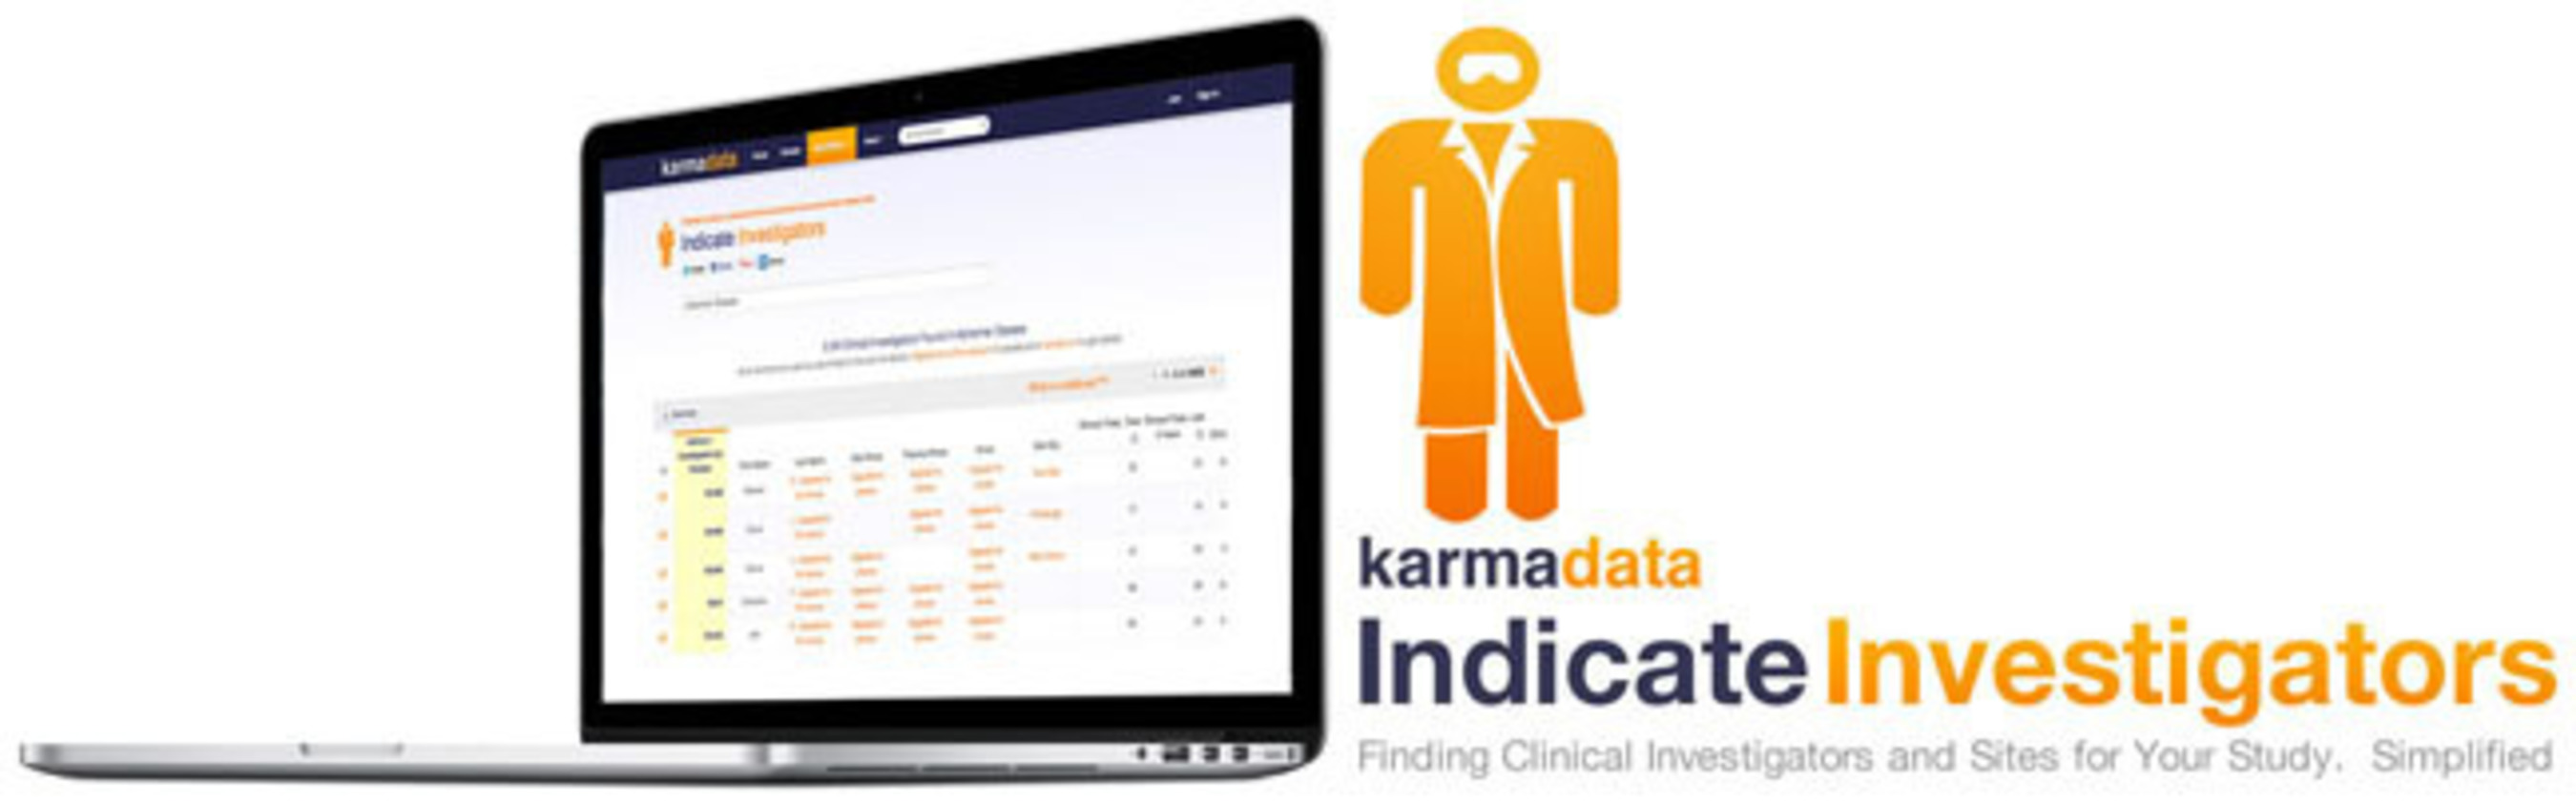 Indicate Investigators - a new karmadata App. (PRNewsFoto/karmadata) (PRNewsFoto/KARMADATA)